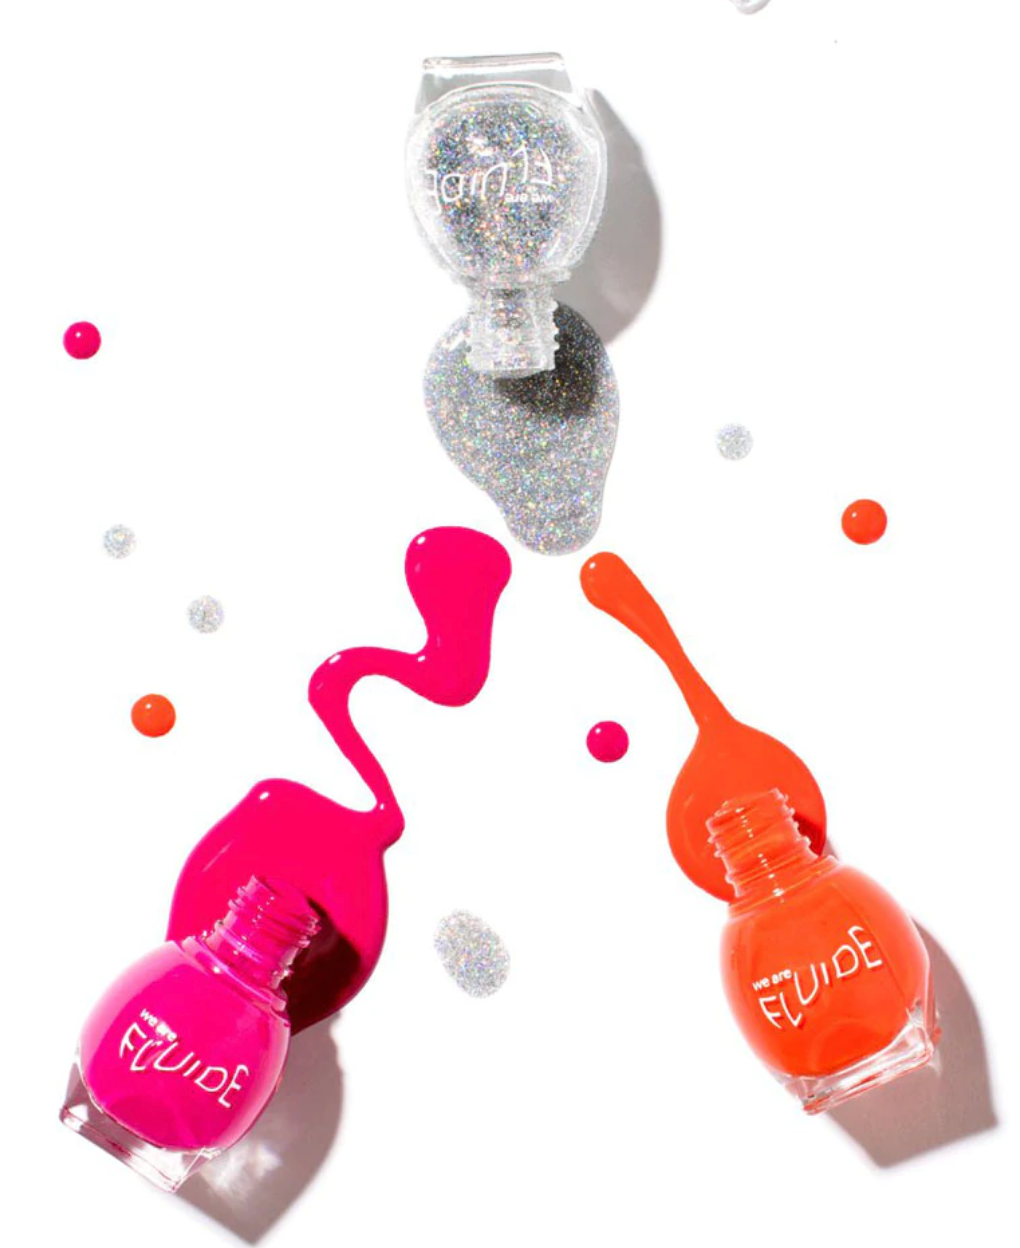 bottles of pink, orange, and silver glitter nail polish